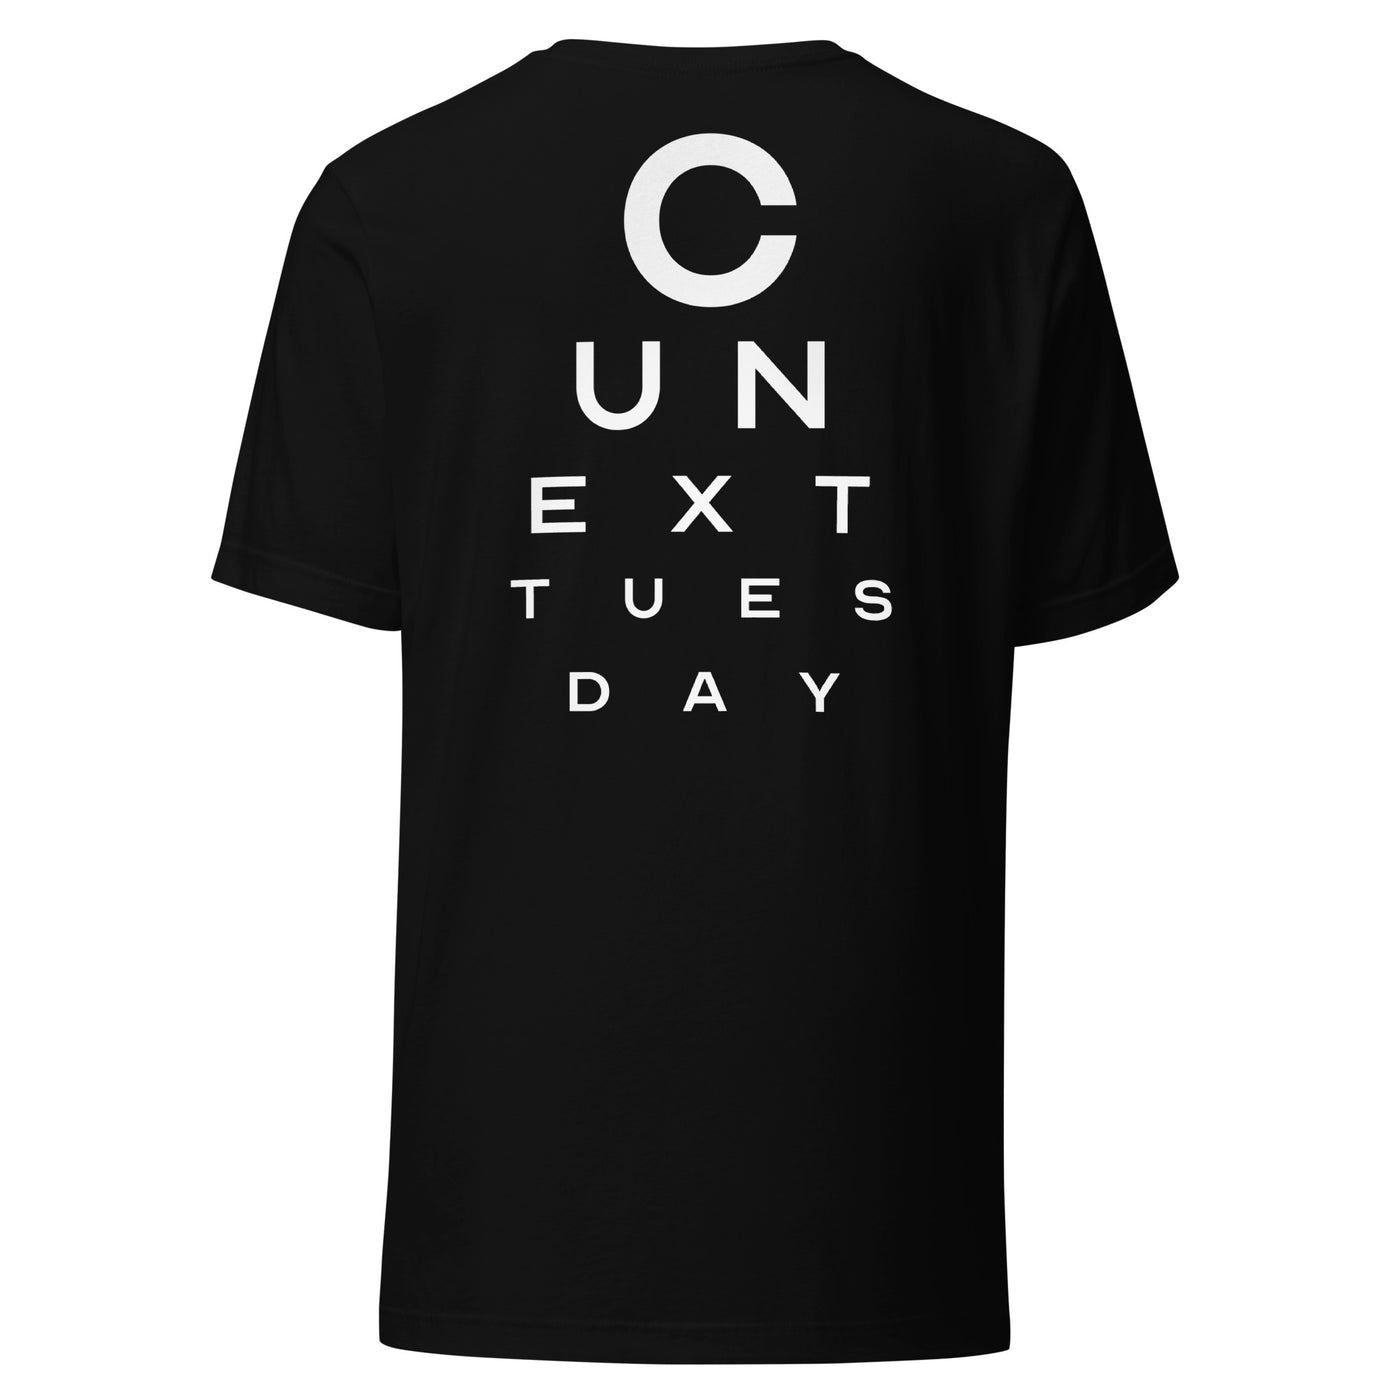 C U NEXT TUESDAY T-Shirt Wales Edition